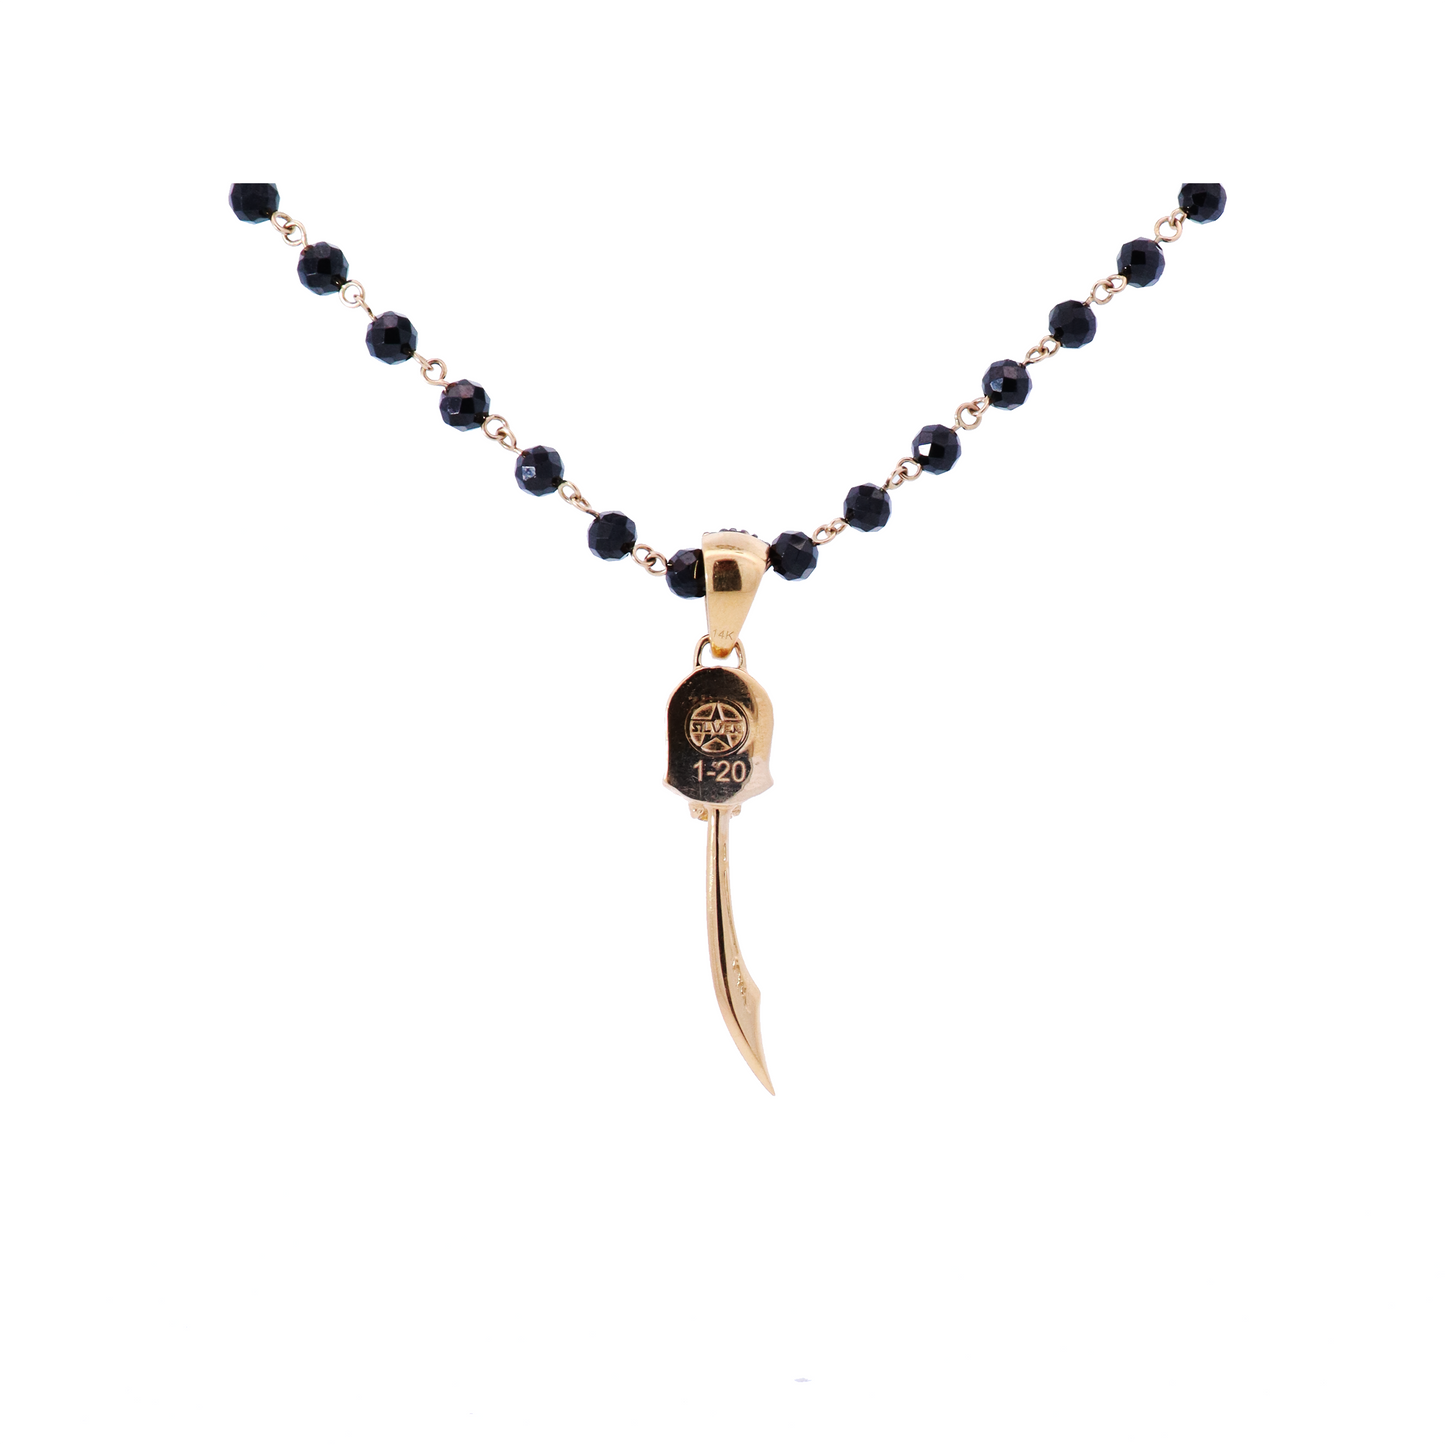 Leather choker necklace for men with black diamonds pendant - JoyElly